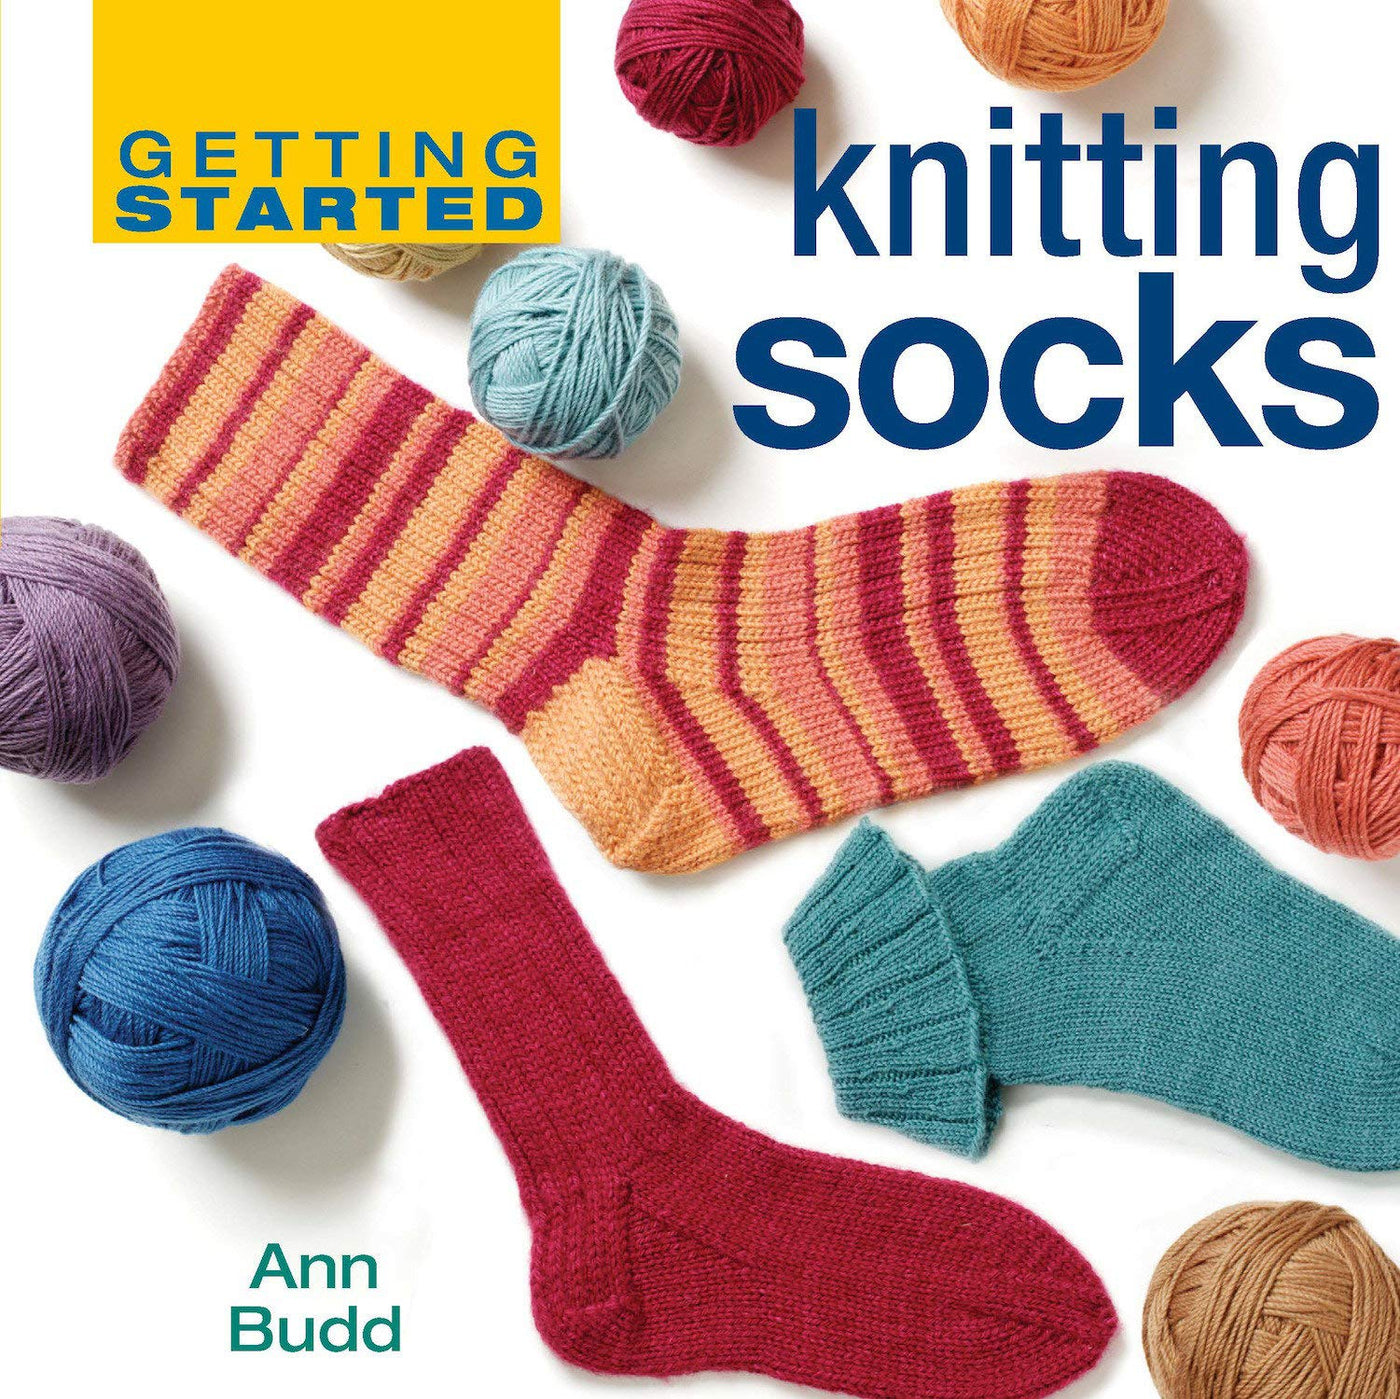 Getting Started Knitting Socks (Ann Budd)